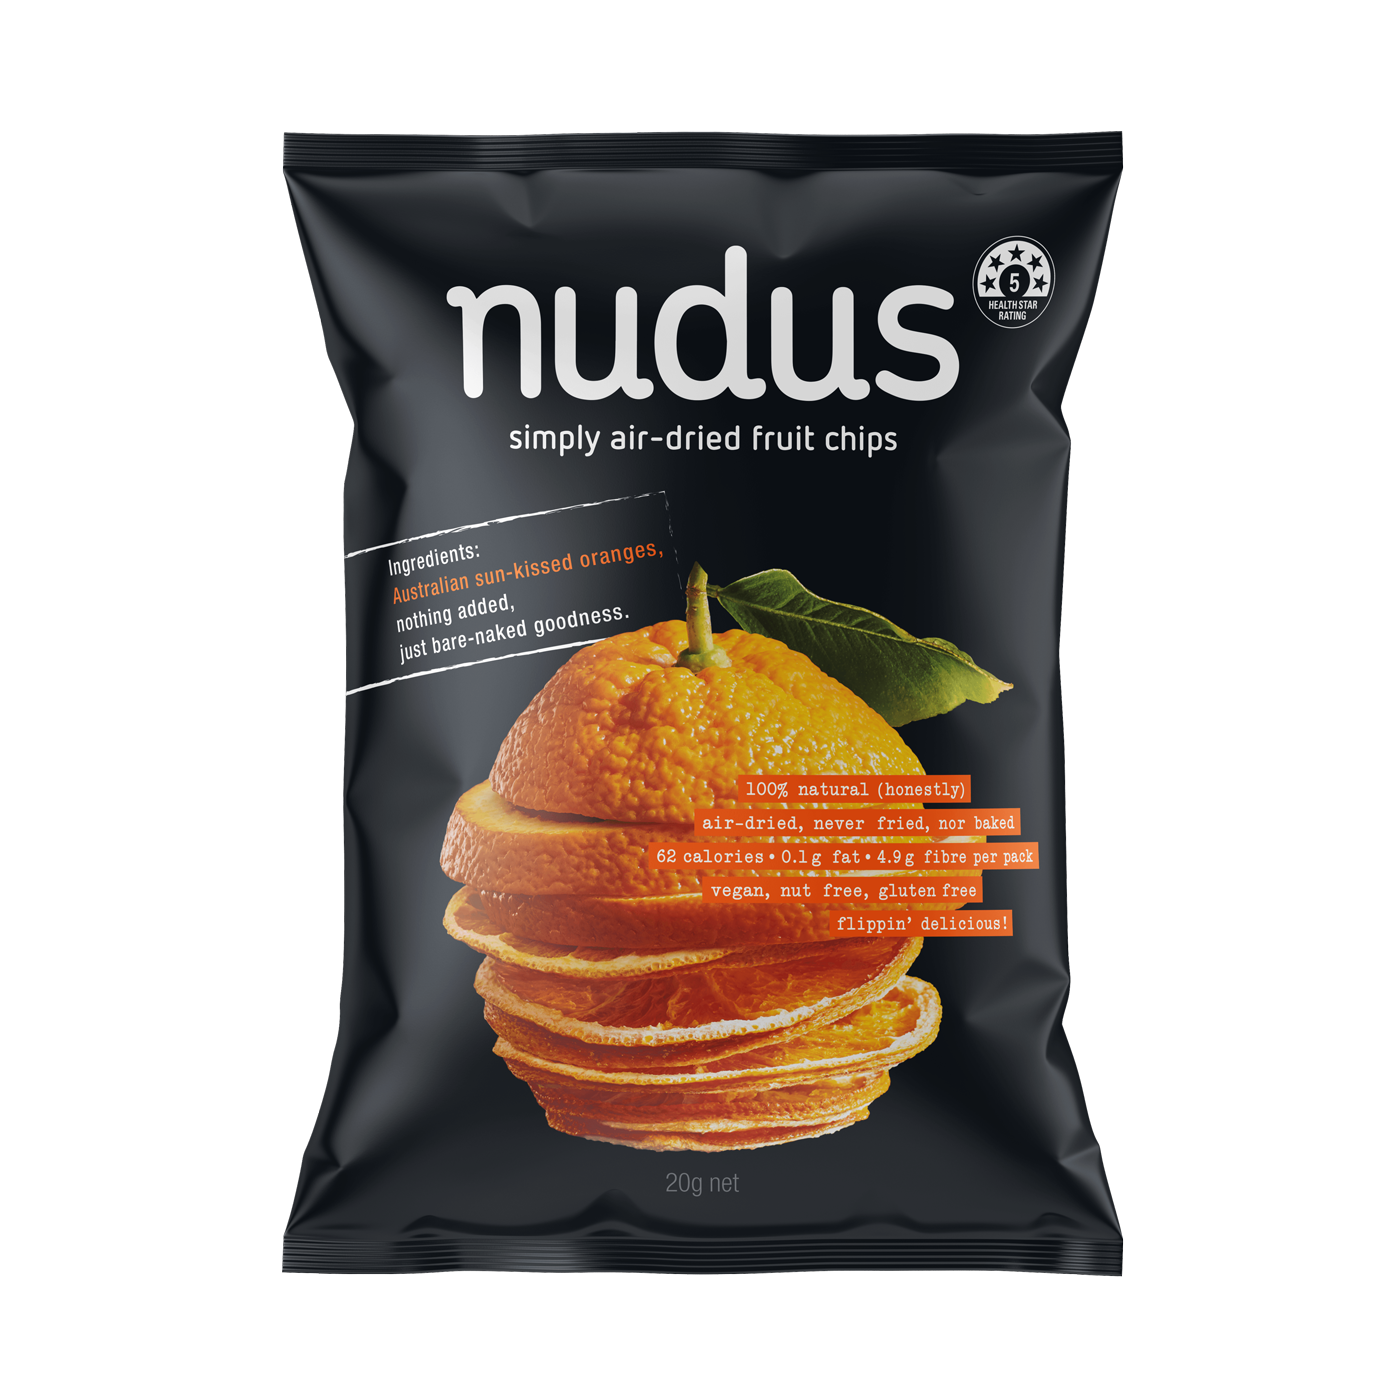 orange fruit chips - 12 bags ($2.75 / 20g bag)